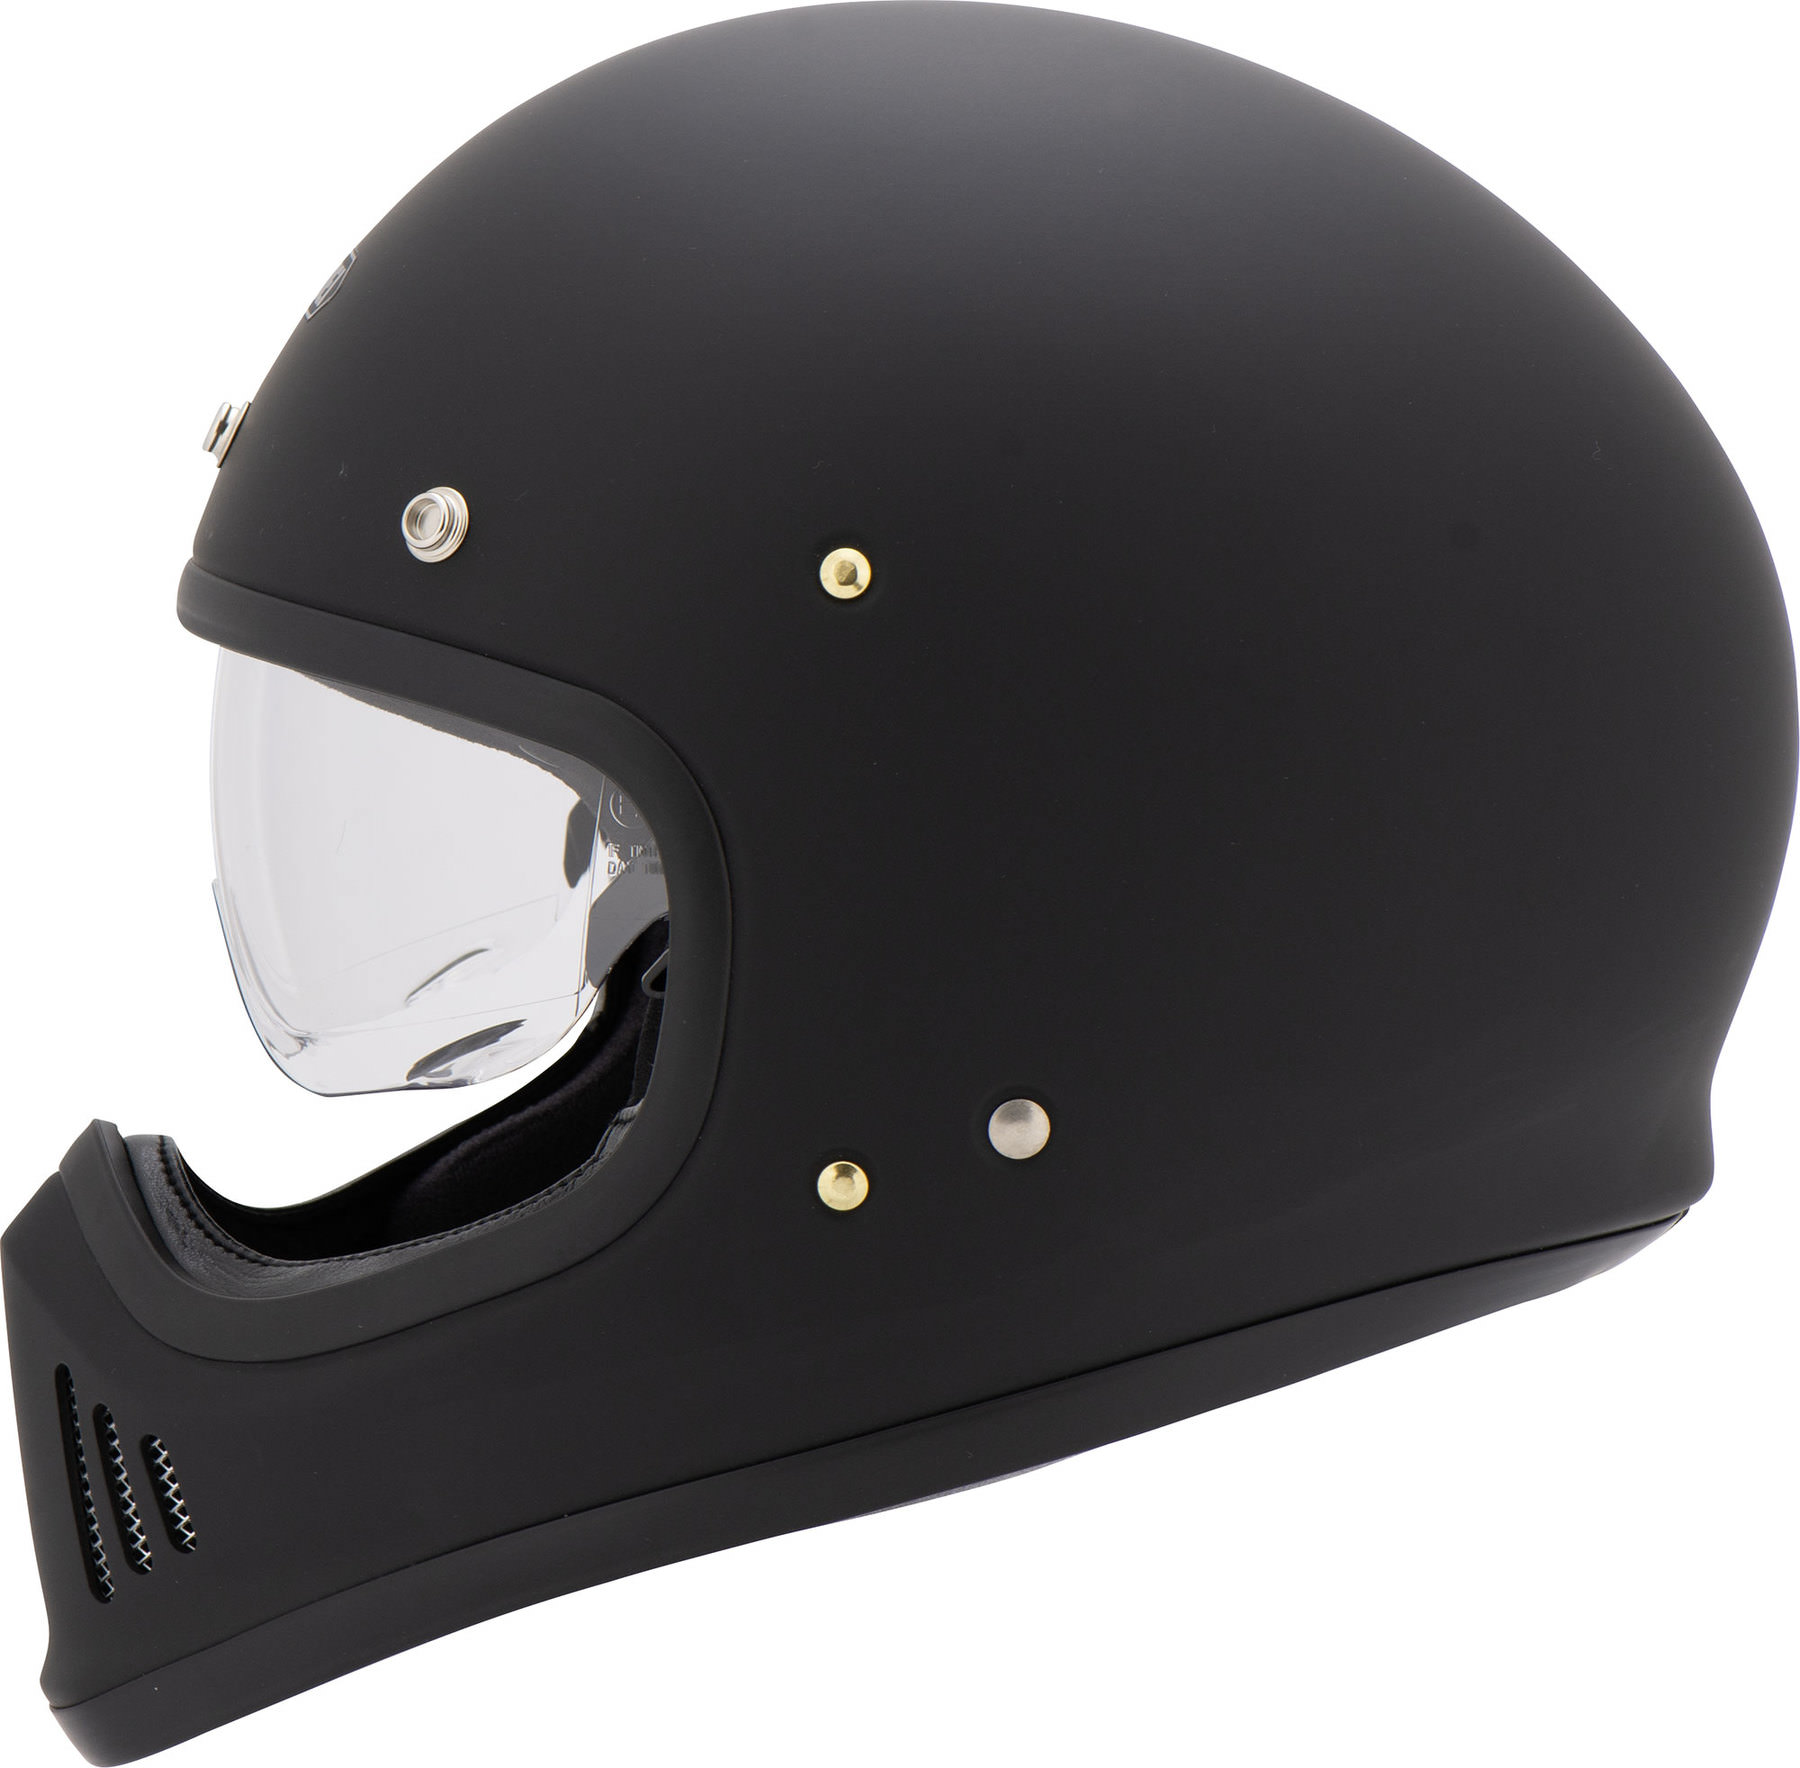 Buy Shoei Ex-Zero Full-Face Helmet | Louis motorcycle clothing and